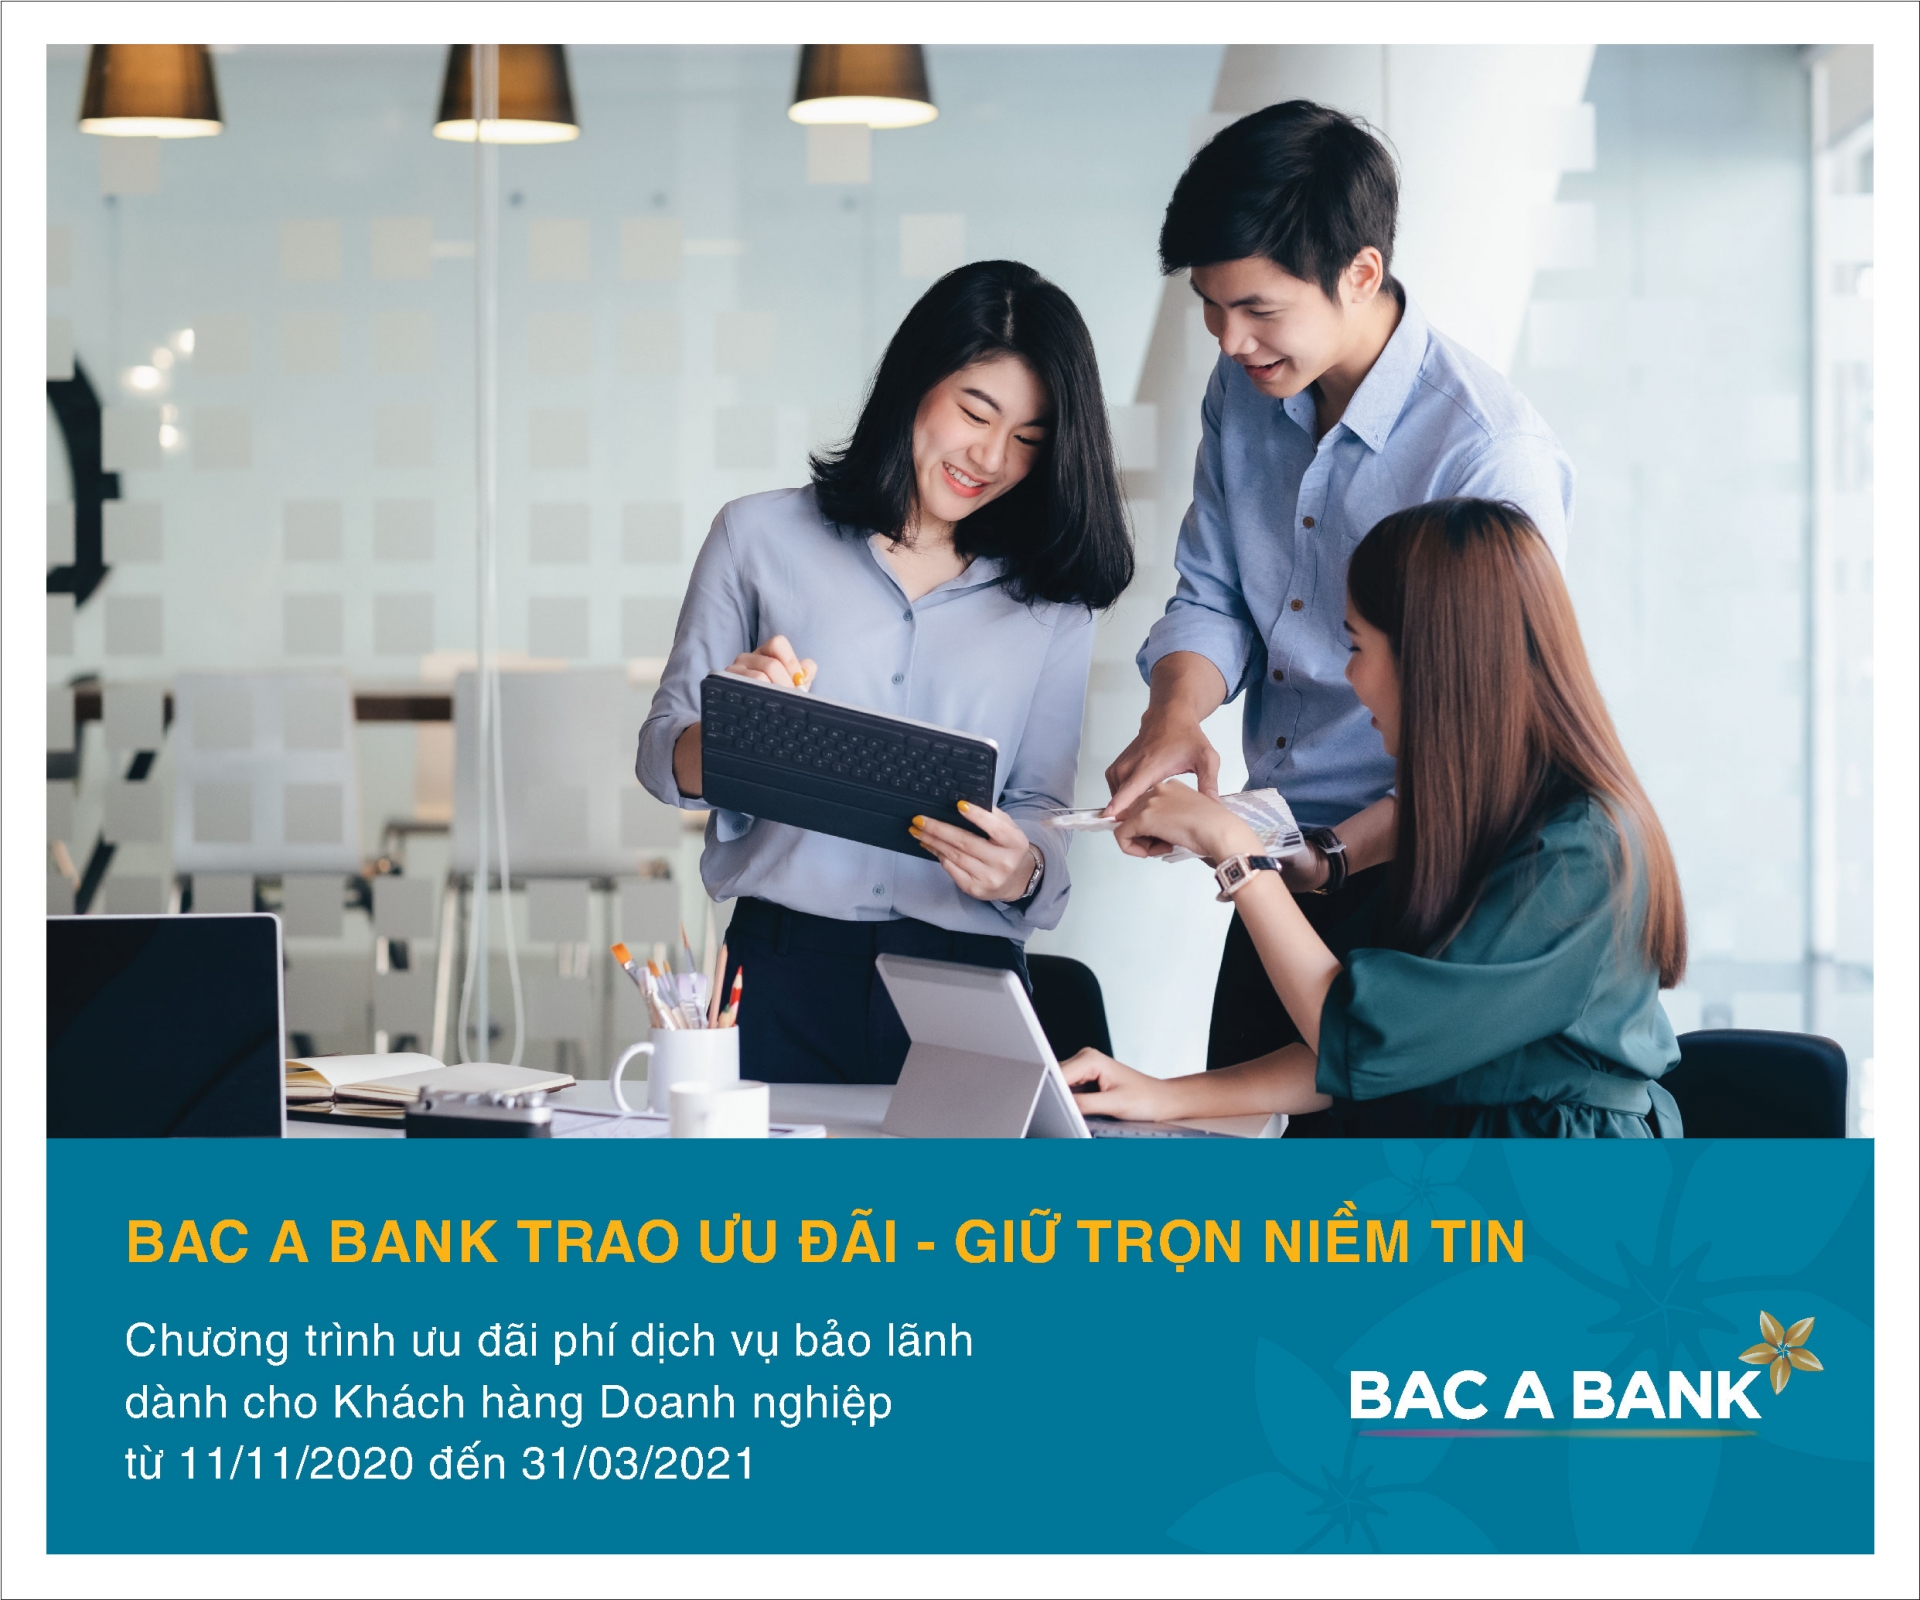 Guarantee incentives for corporate customers at BAC A BANK